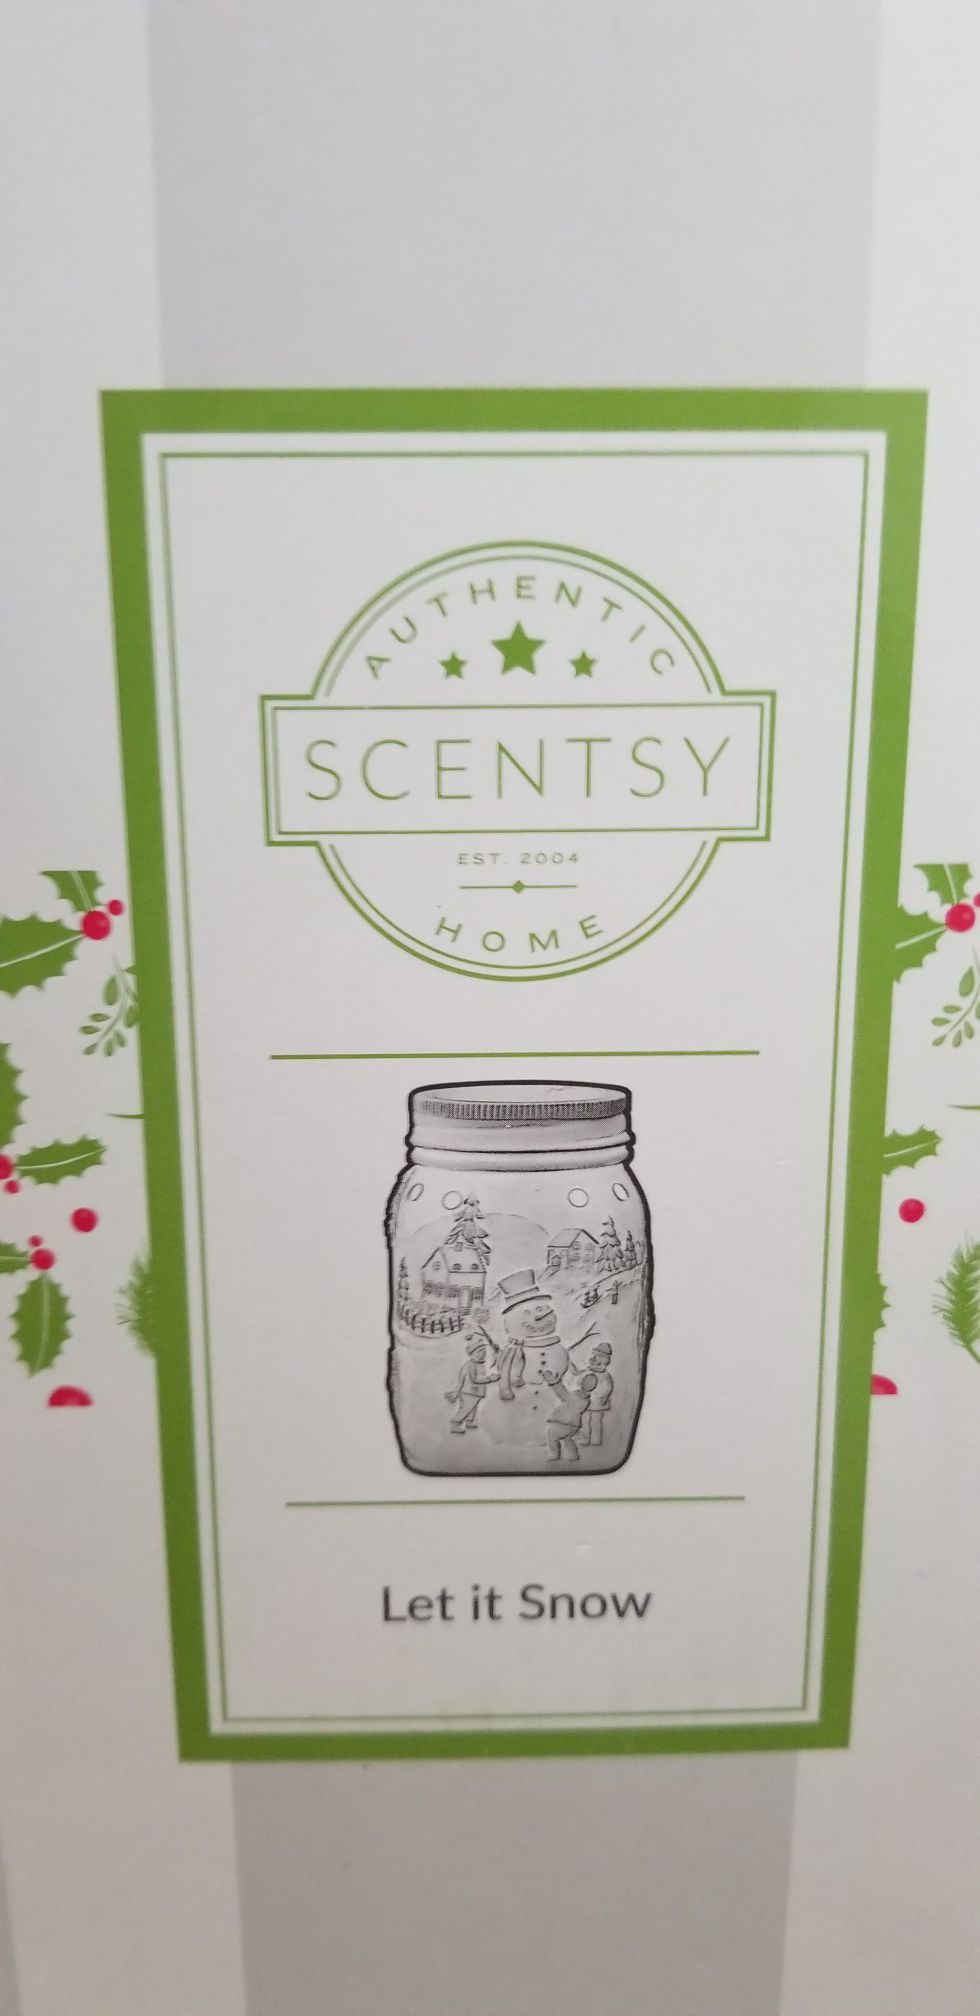 Let it snow-holiday Scentsy warmer, glowing mason jar